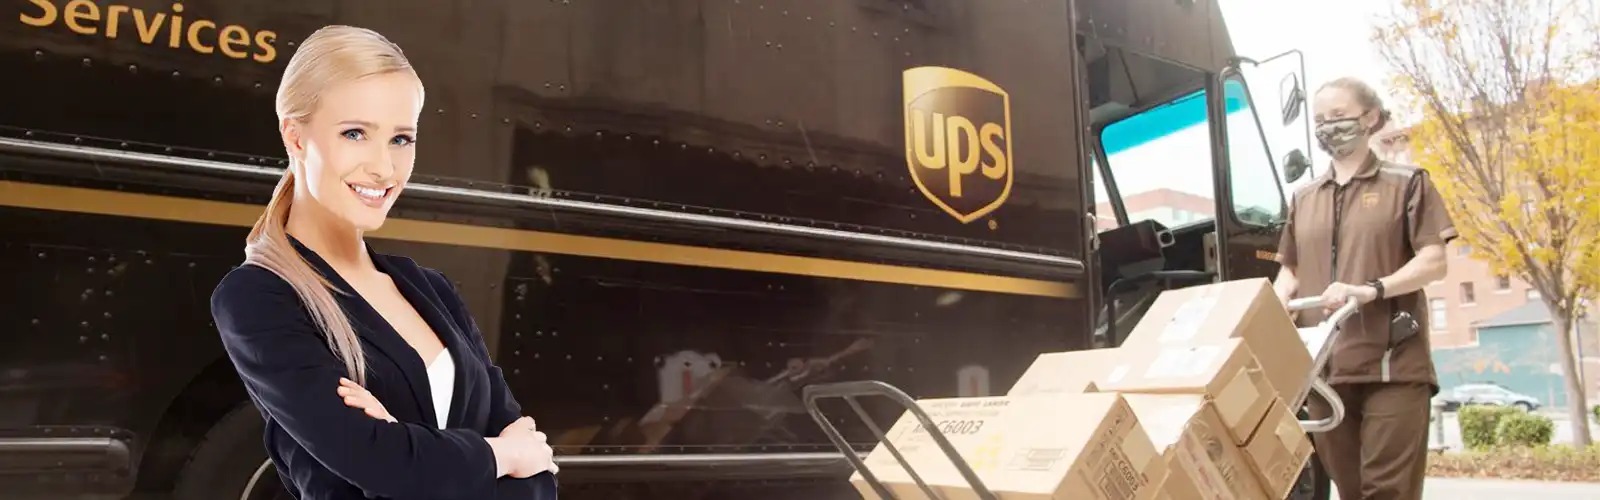 UPS-Customer-Service